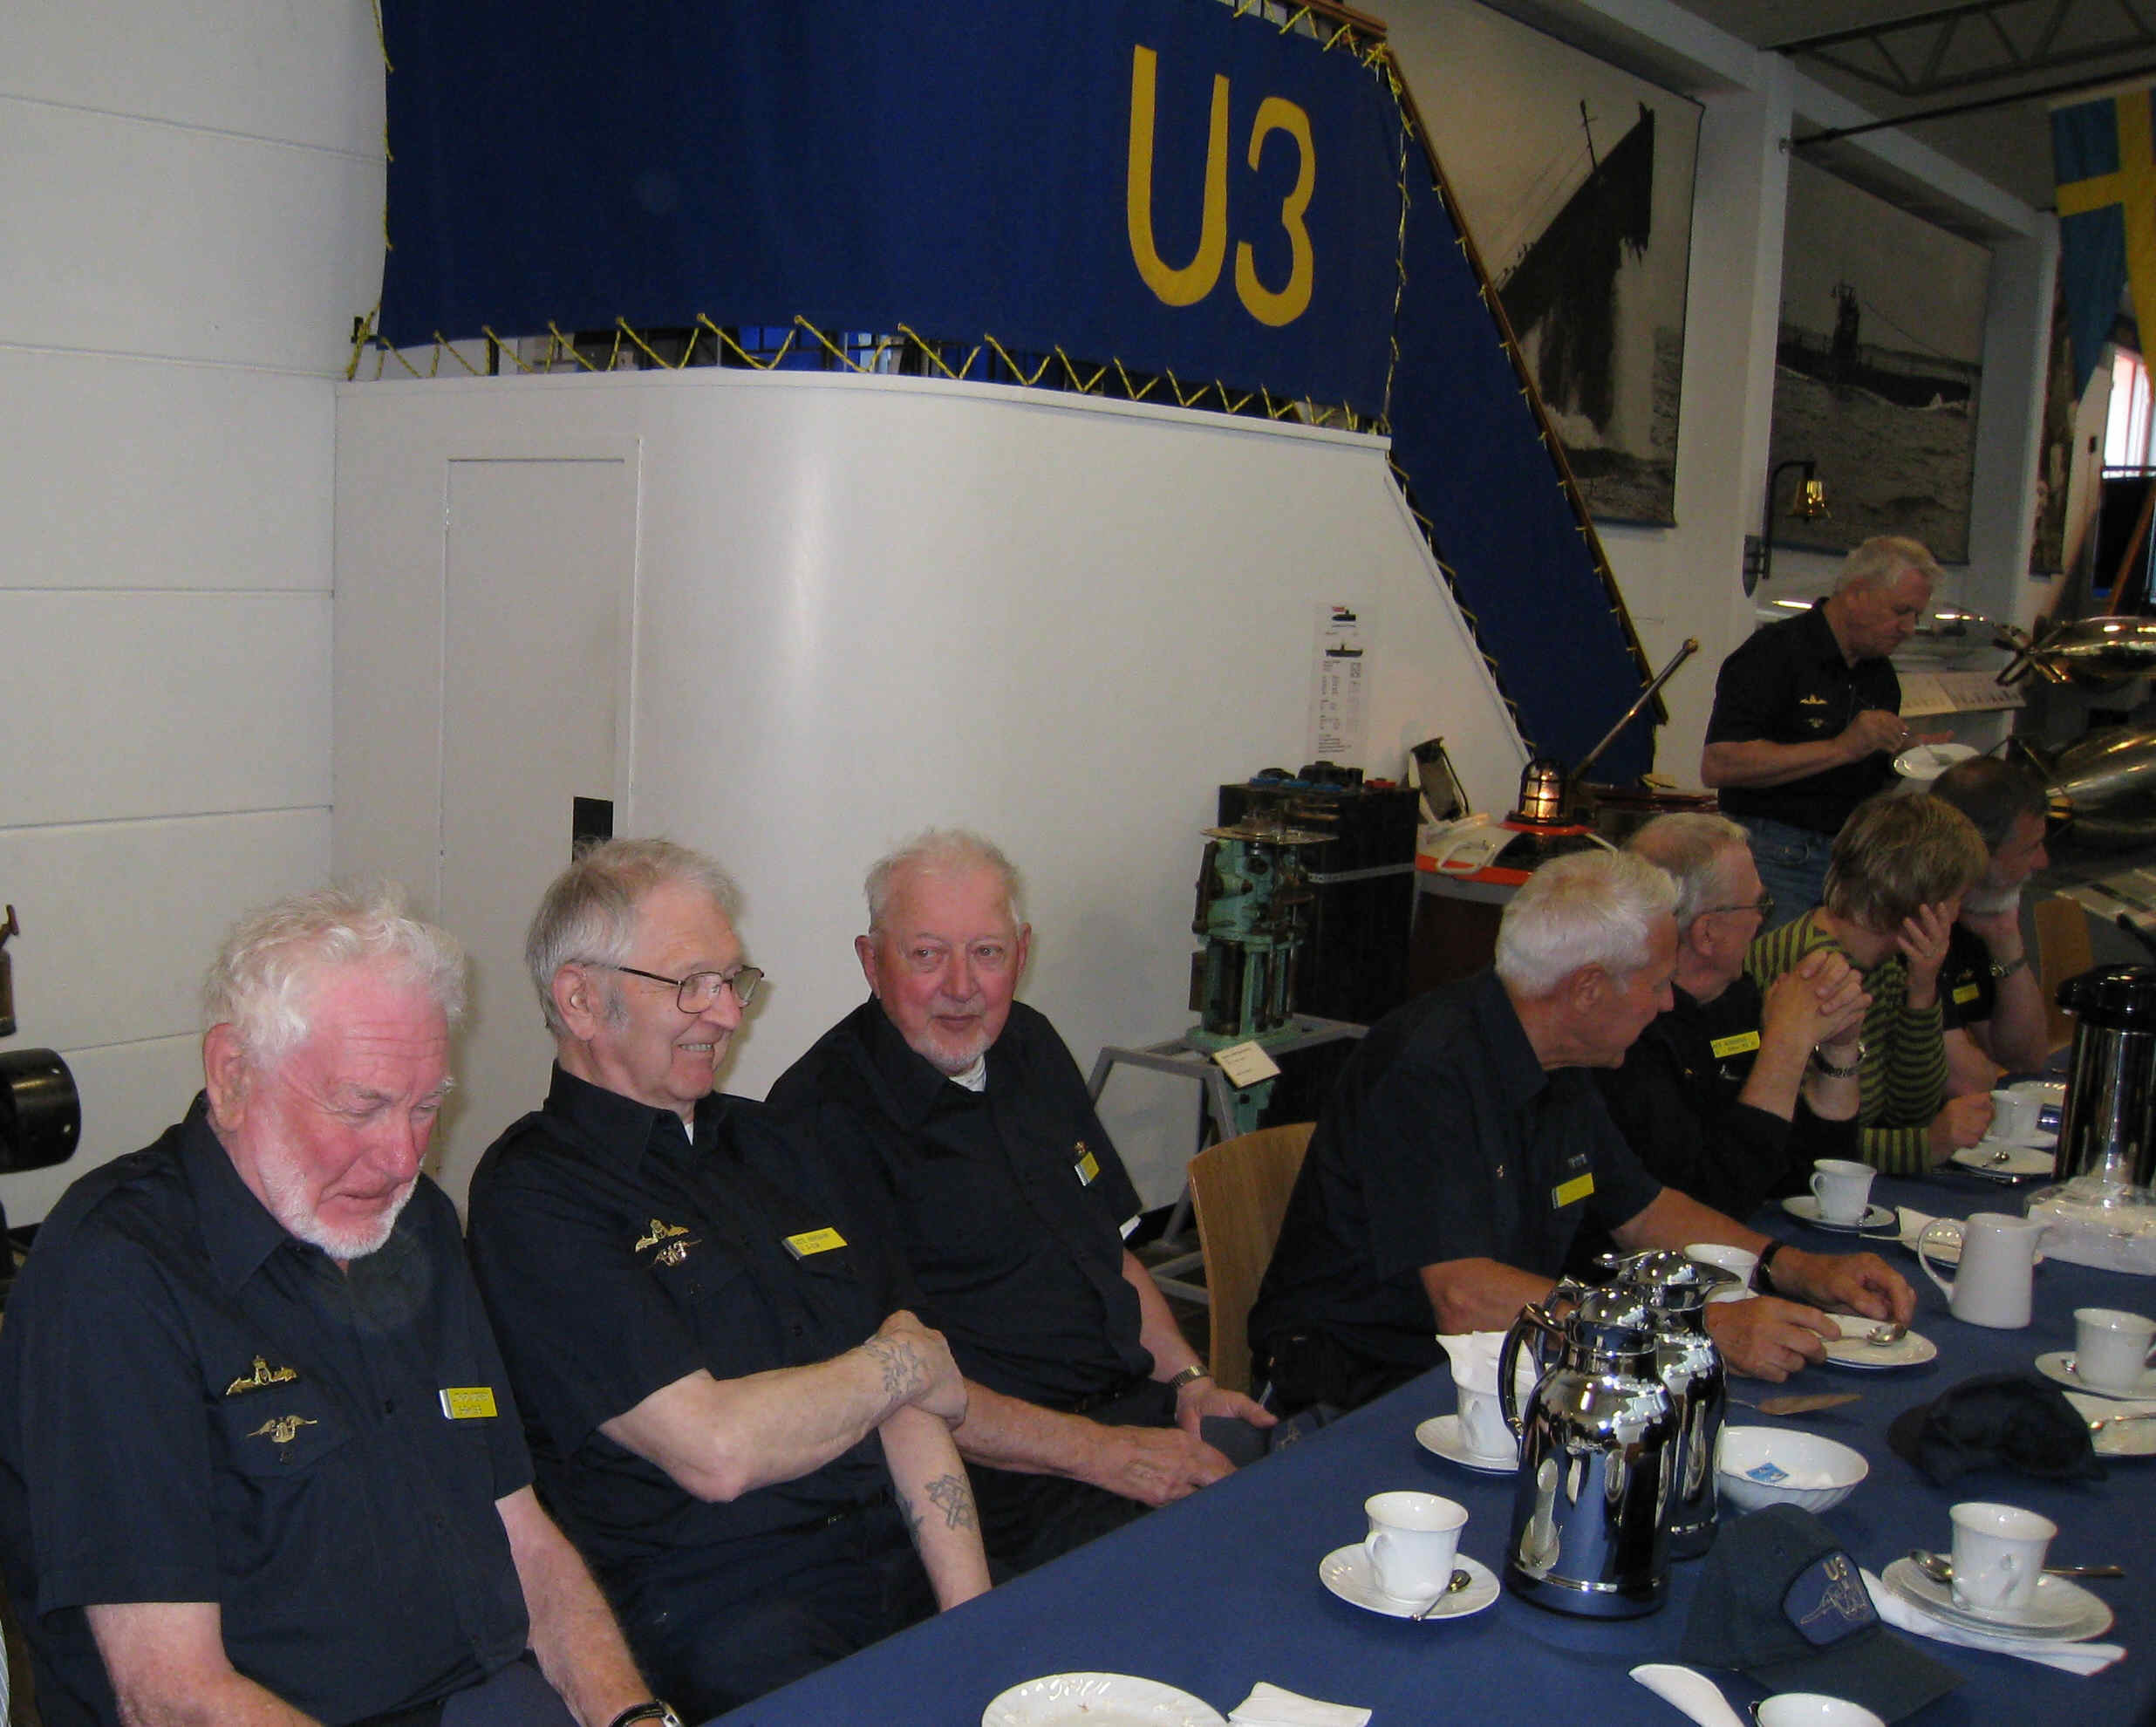 Submarine U3 veterans celebrating